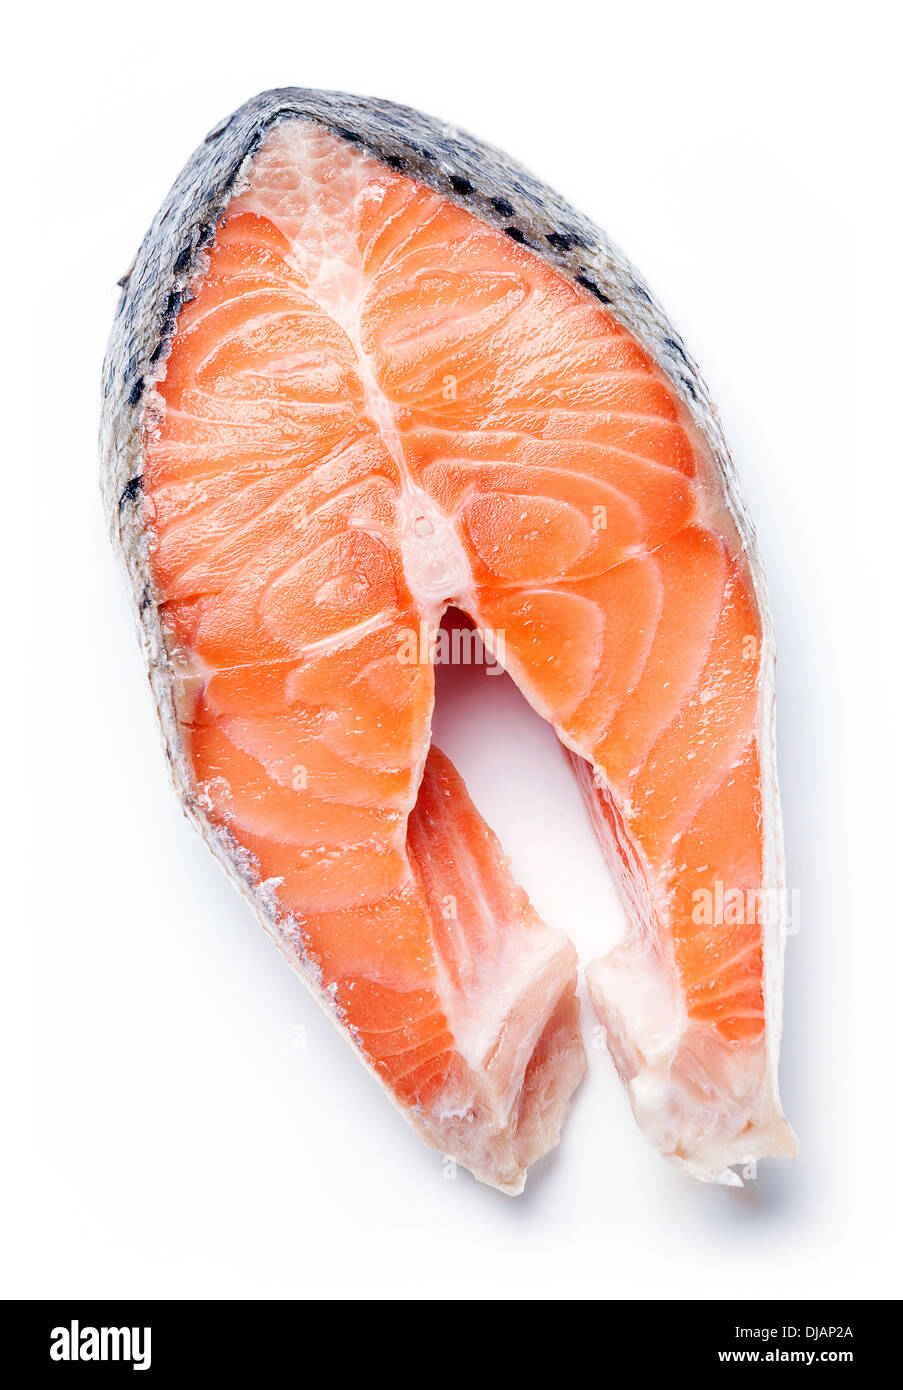 Norwegian salmon red fish on white background Stock Photo